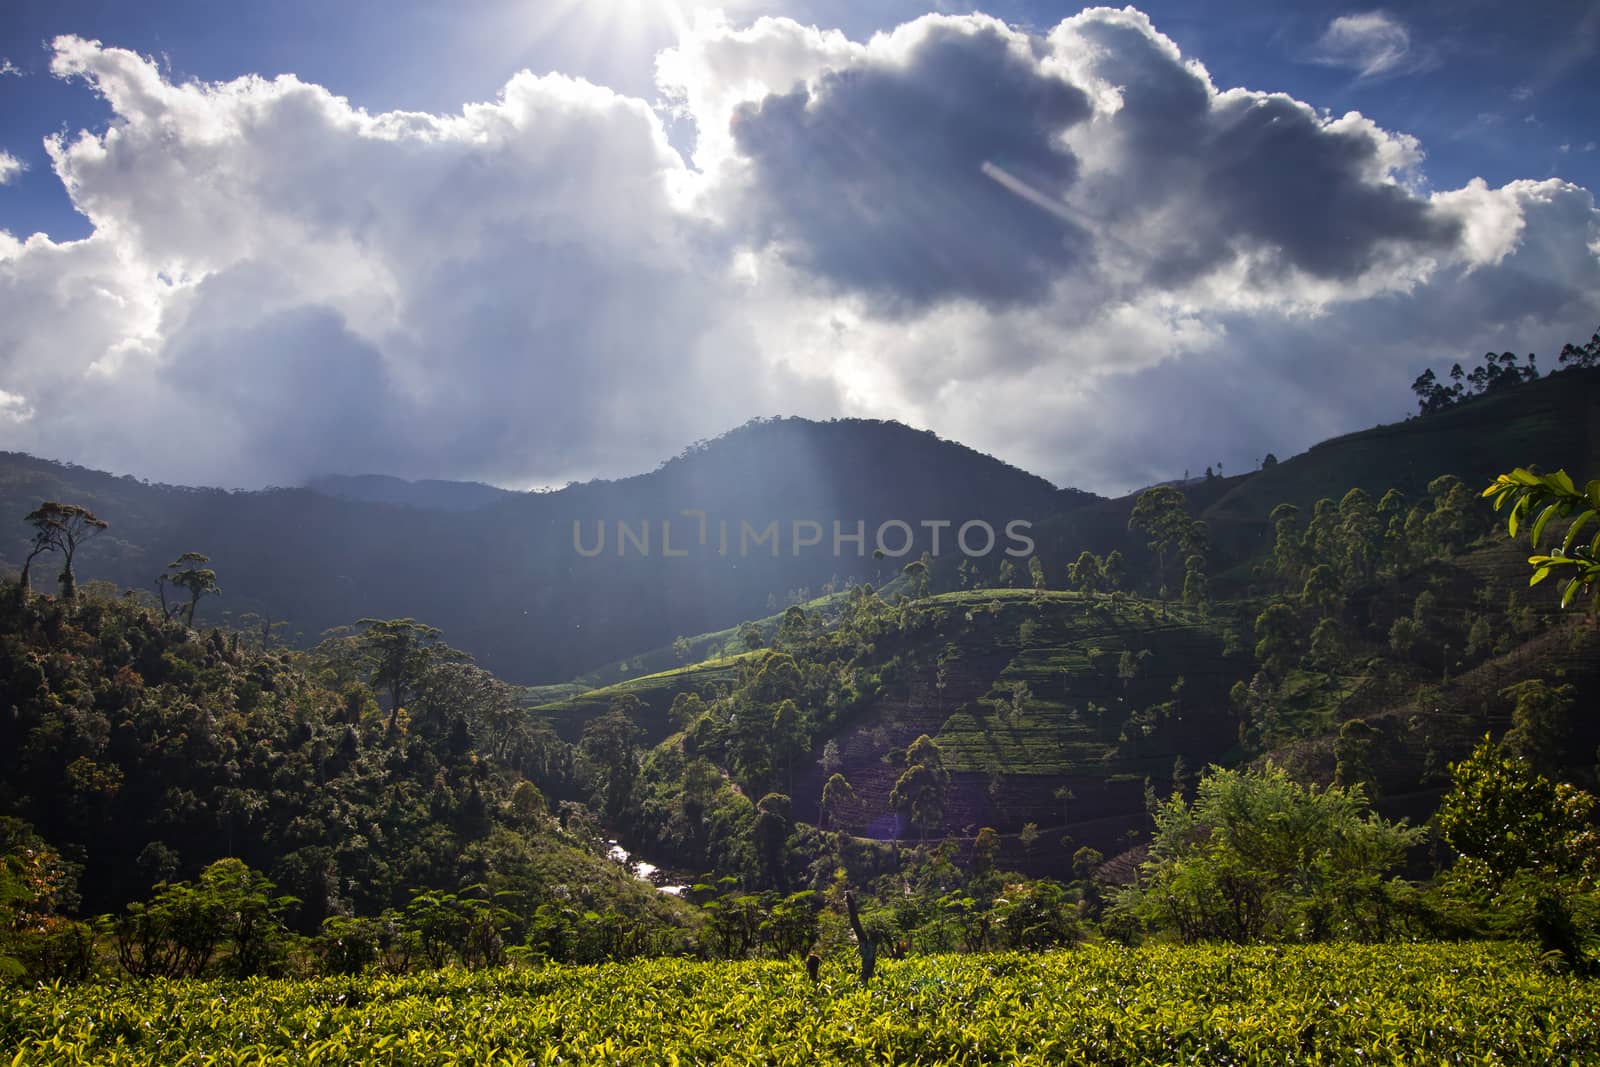 Tea plantation landscape in Sri Lanka